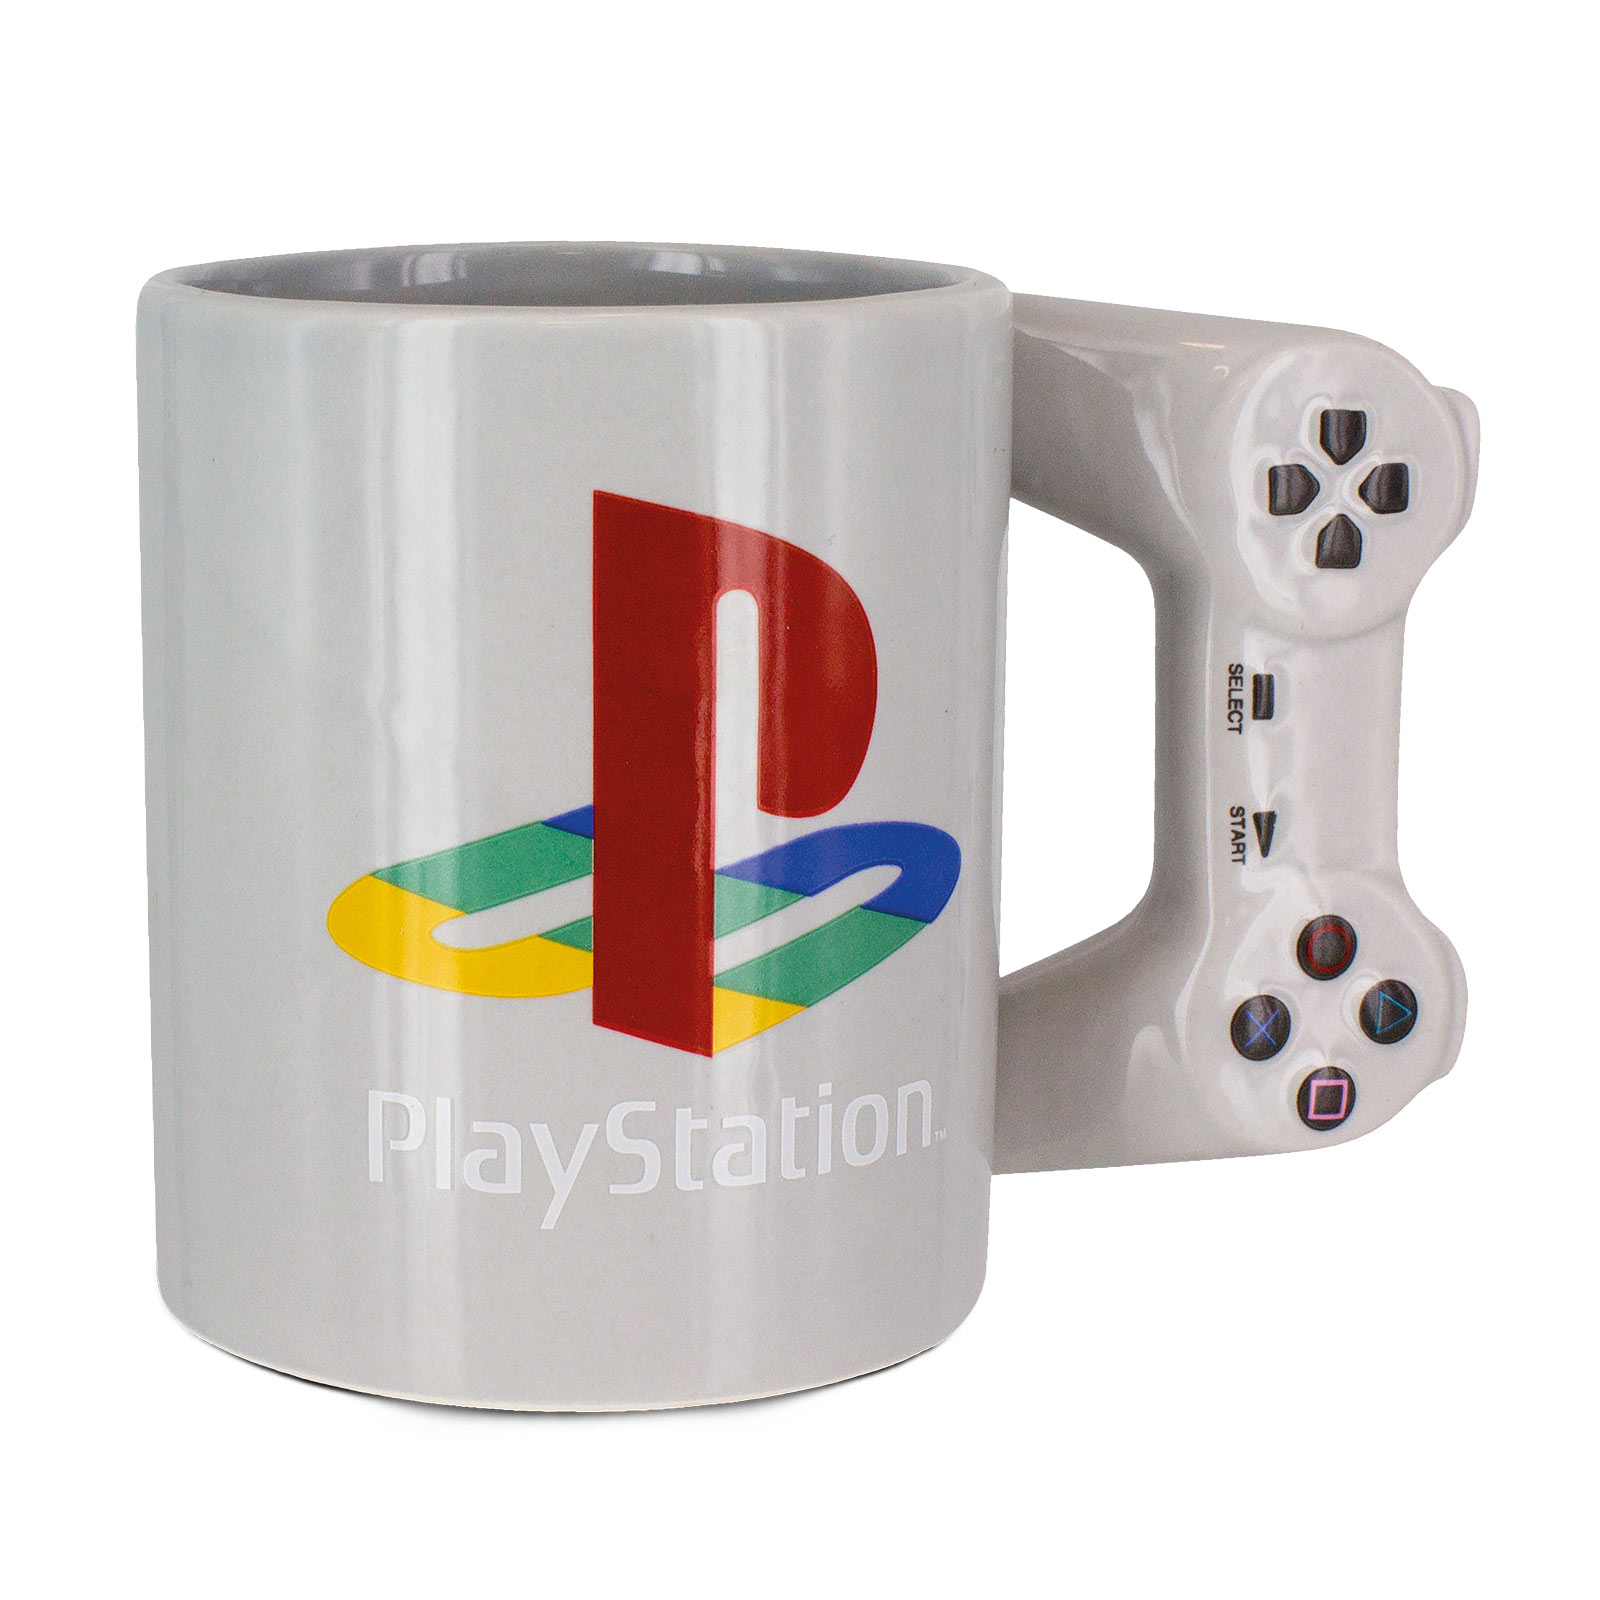 PlayStation - Controller 3D Tasse grau